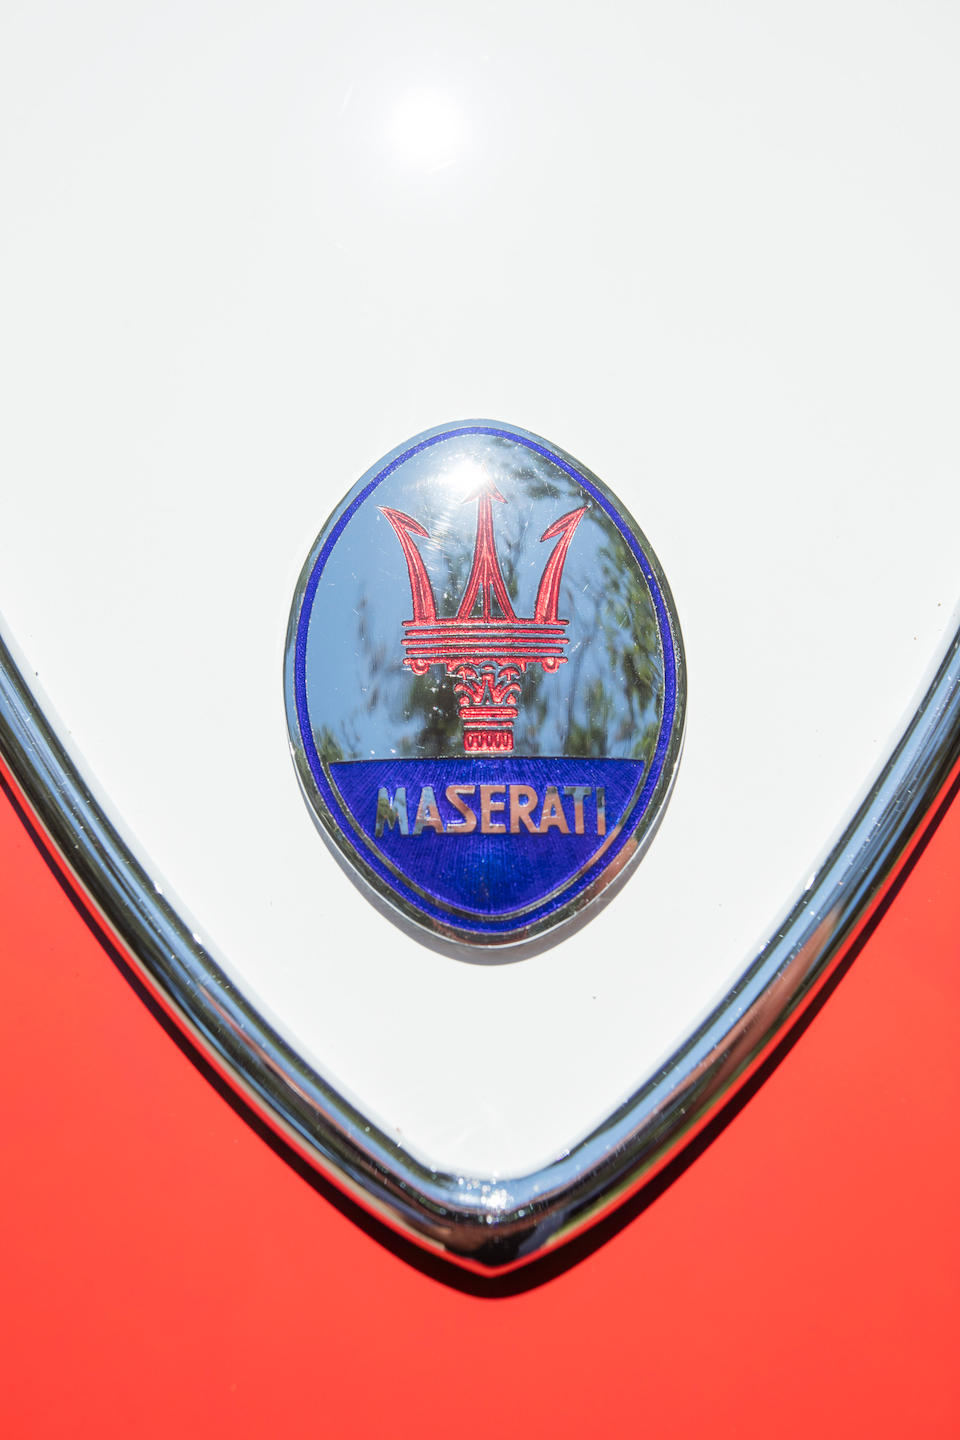 <B>1956 Maserati A6G/54 Gran Sport Spider </B><br /> Chassis no. 2180<br /> Engine no. 2146